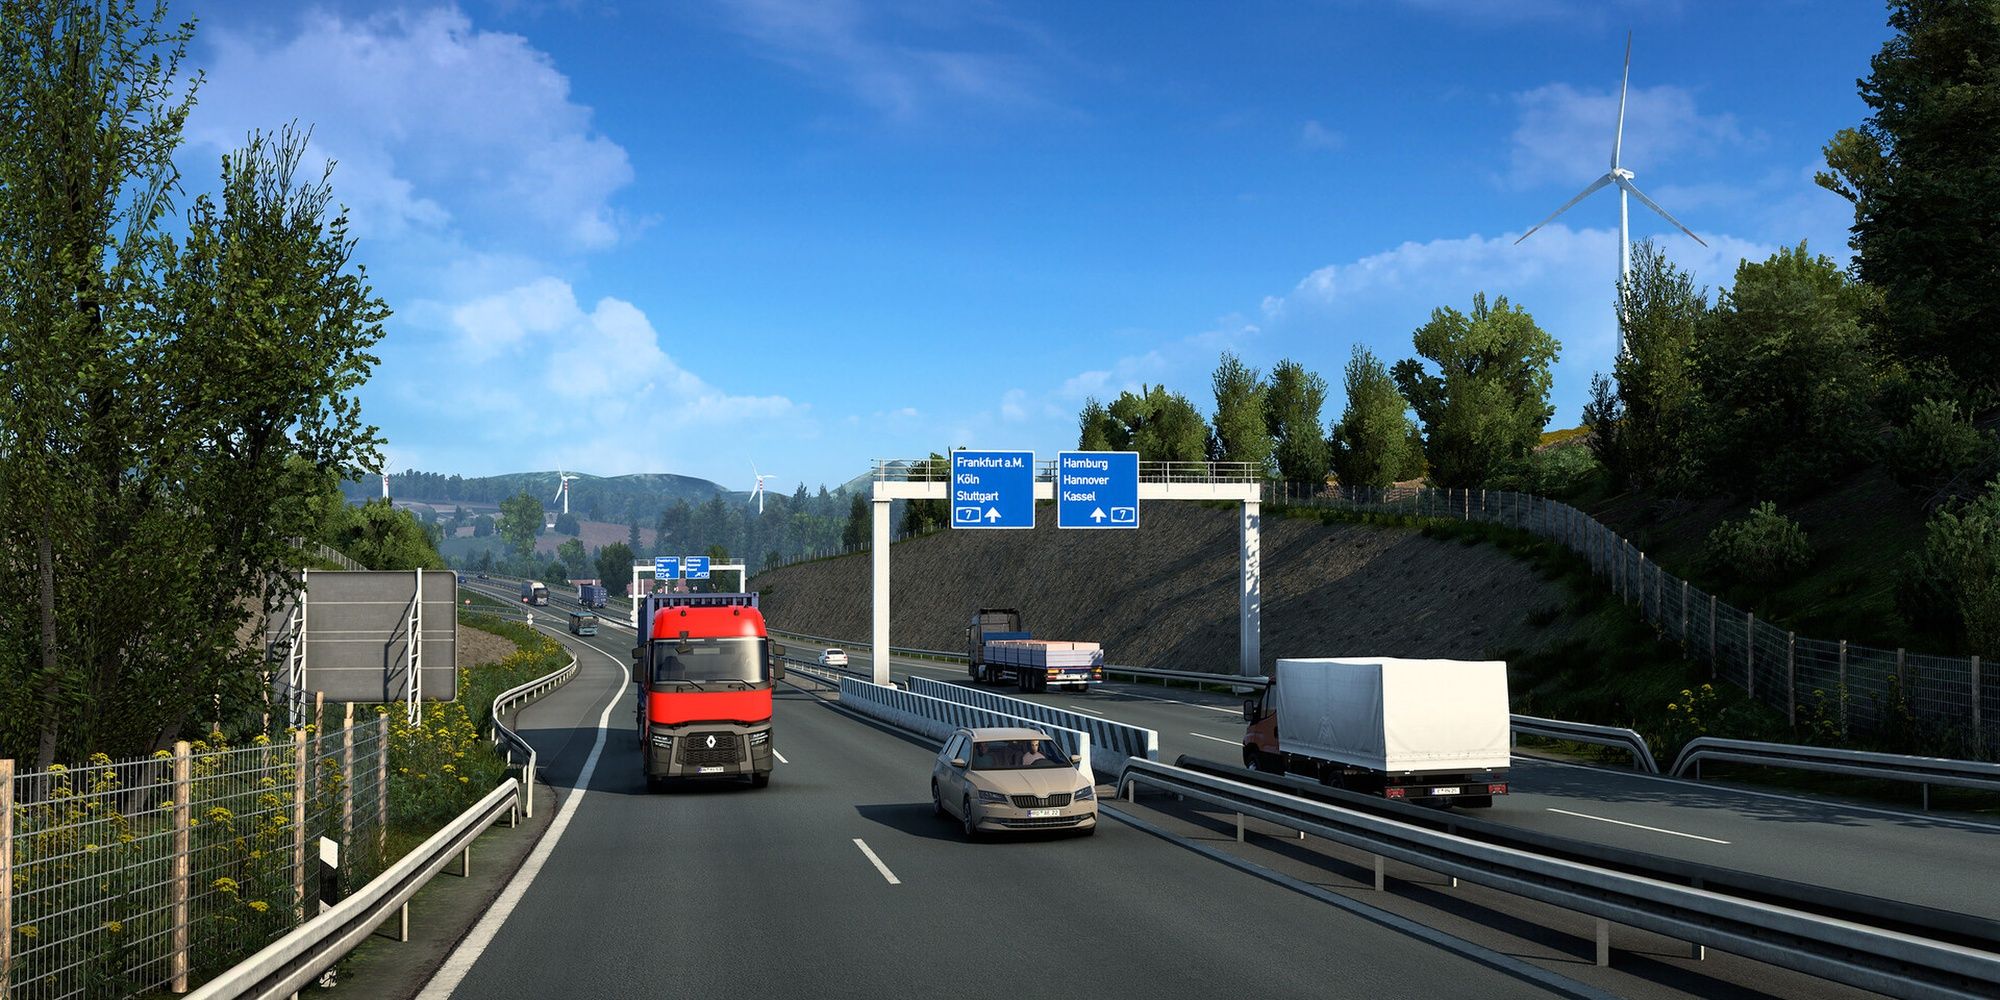 Euro Truck Simulator: Scenic Shot Of A European Highway